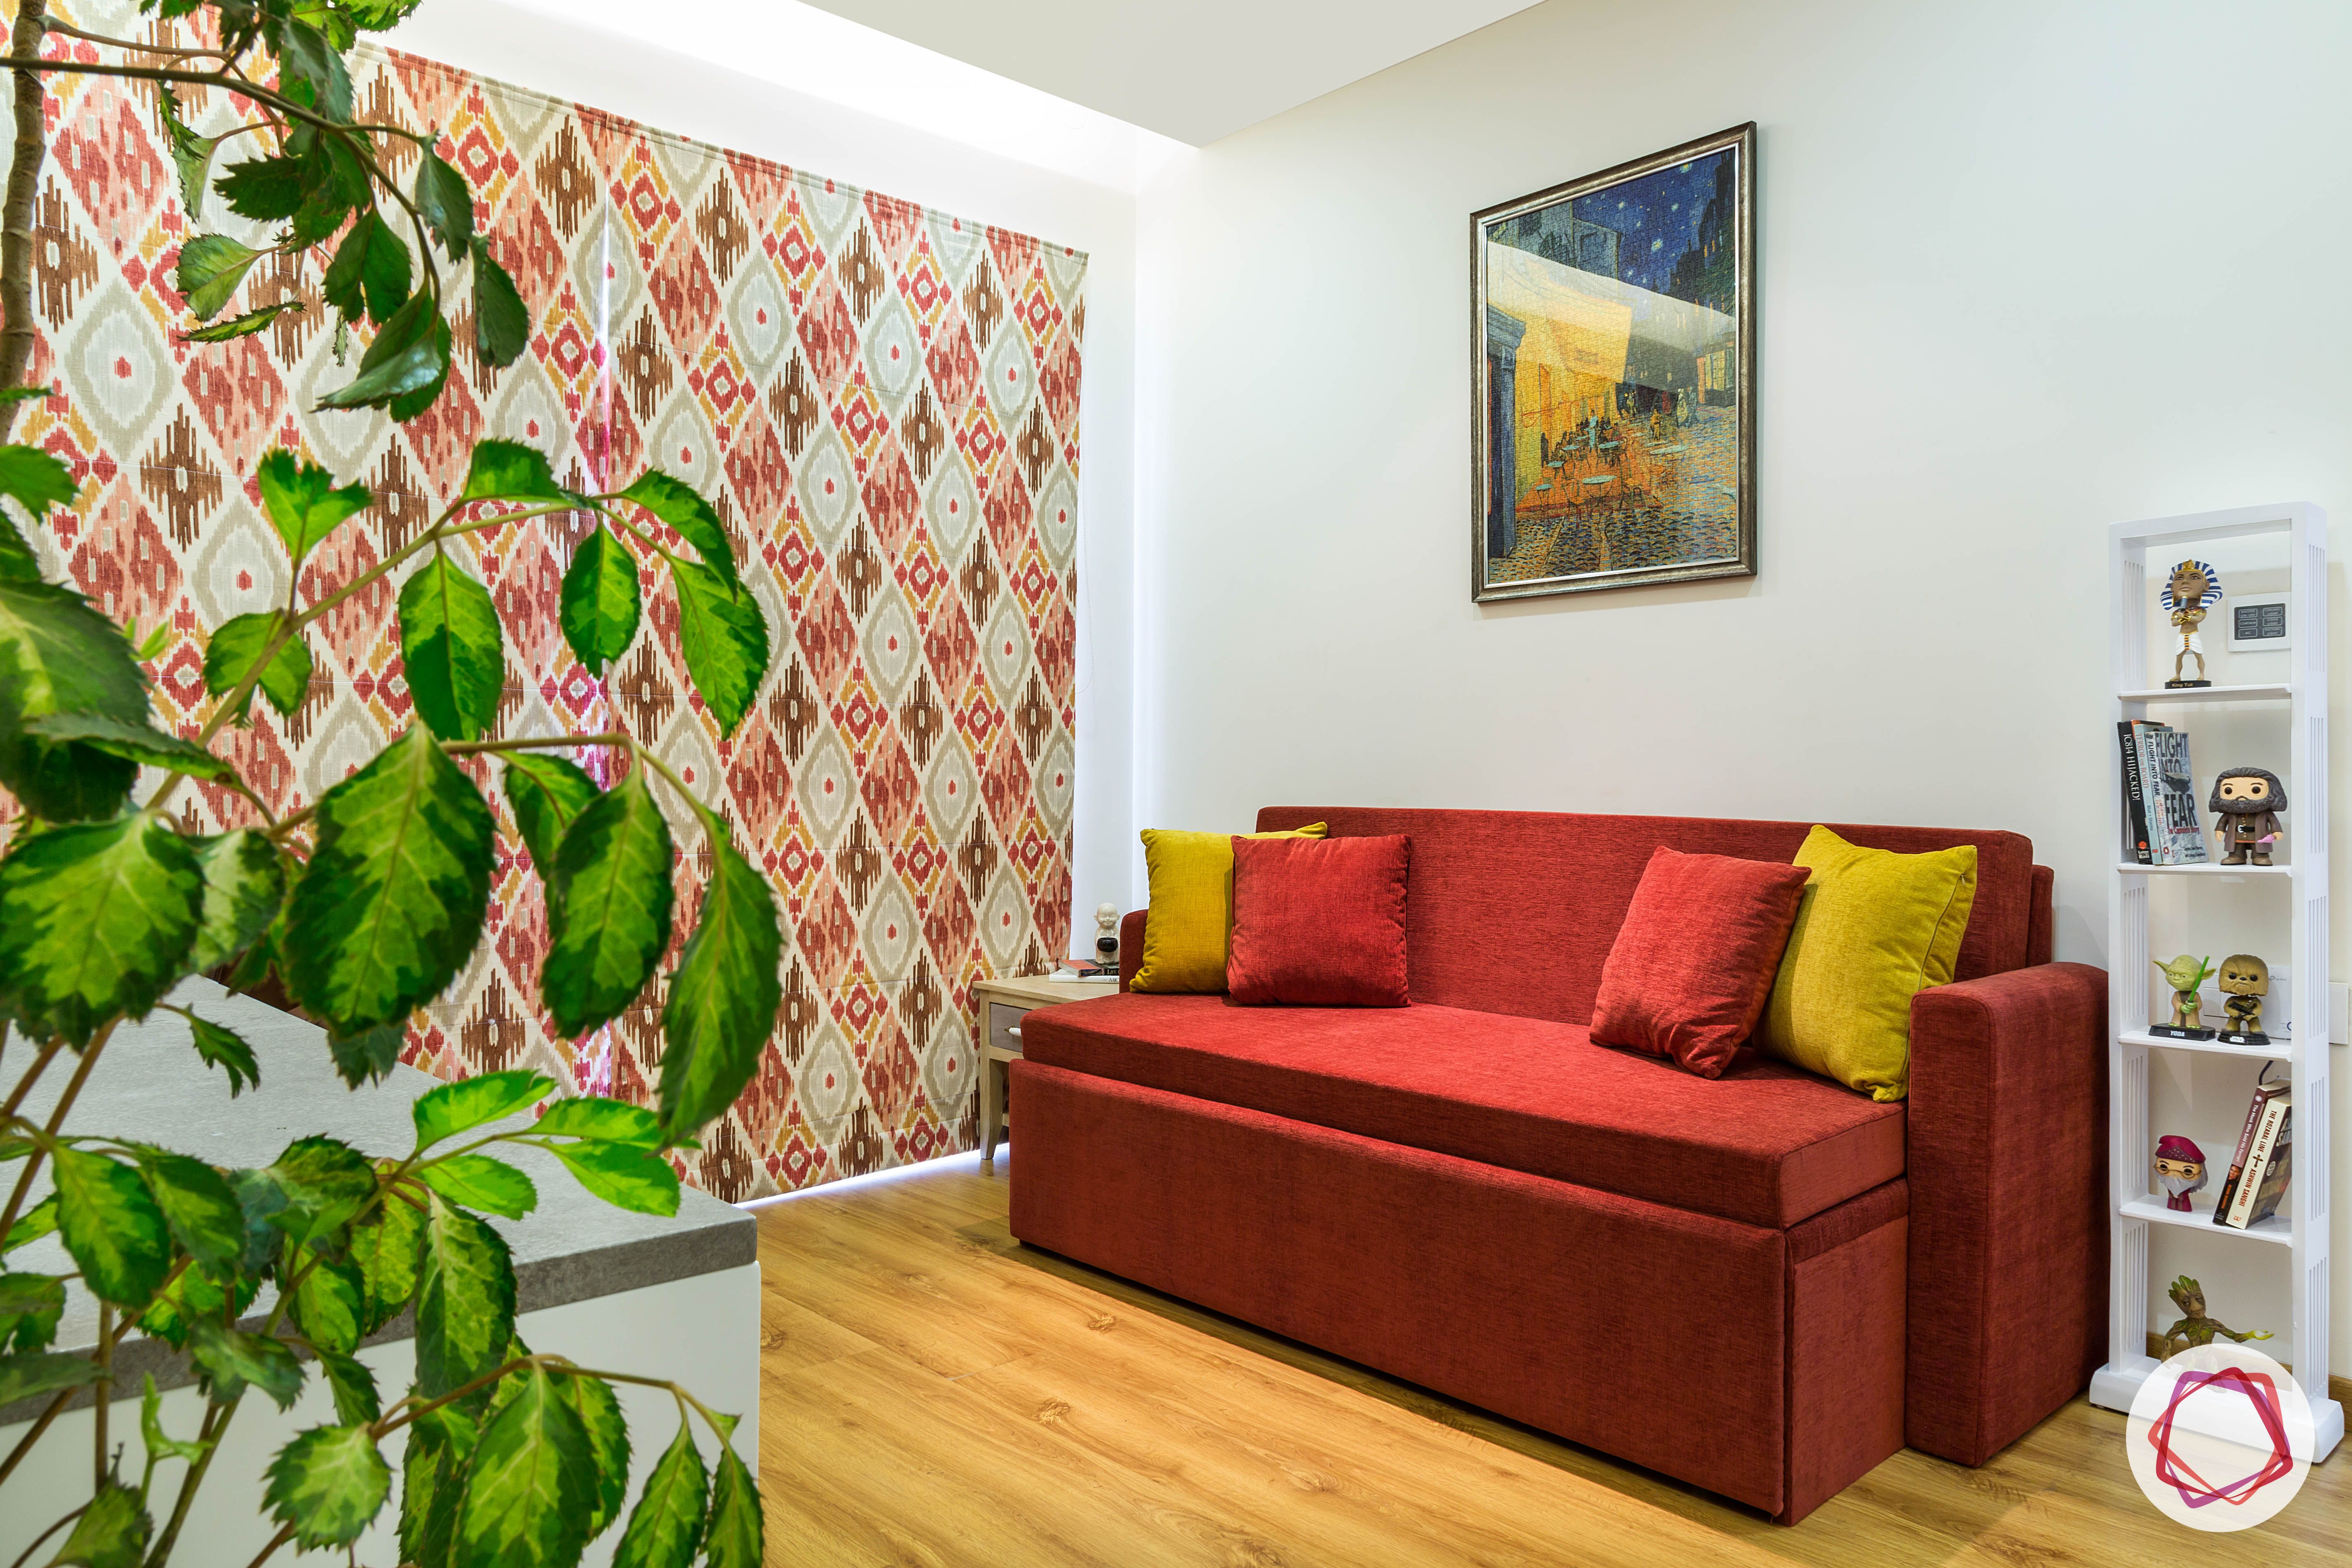 minimalism-minimal decor-sofa-cum bed designs-ladder cabinet designs-wooden flooring designs-red sofa designs